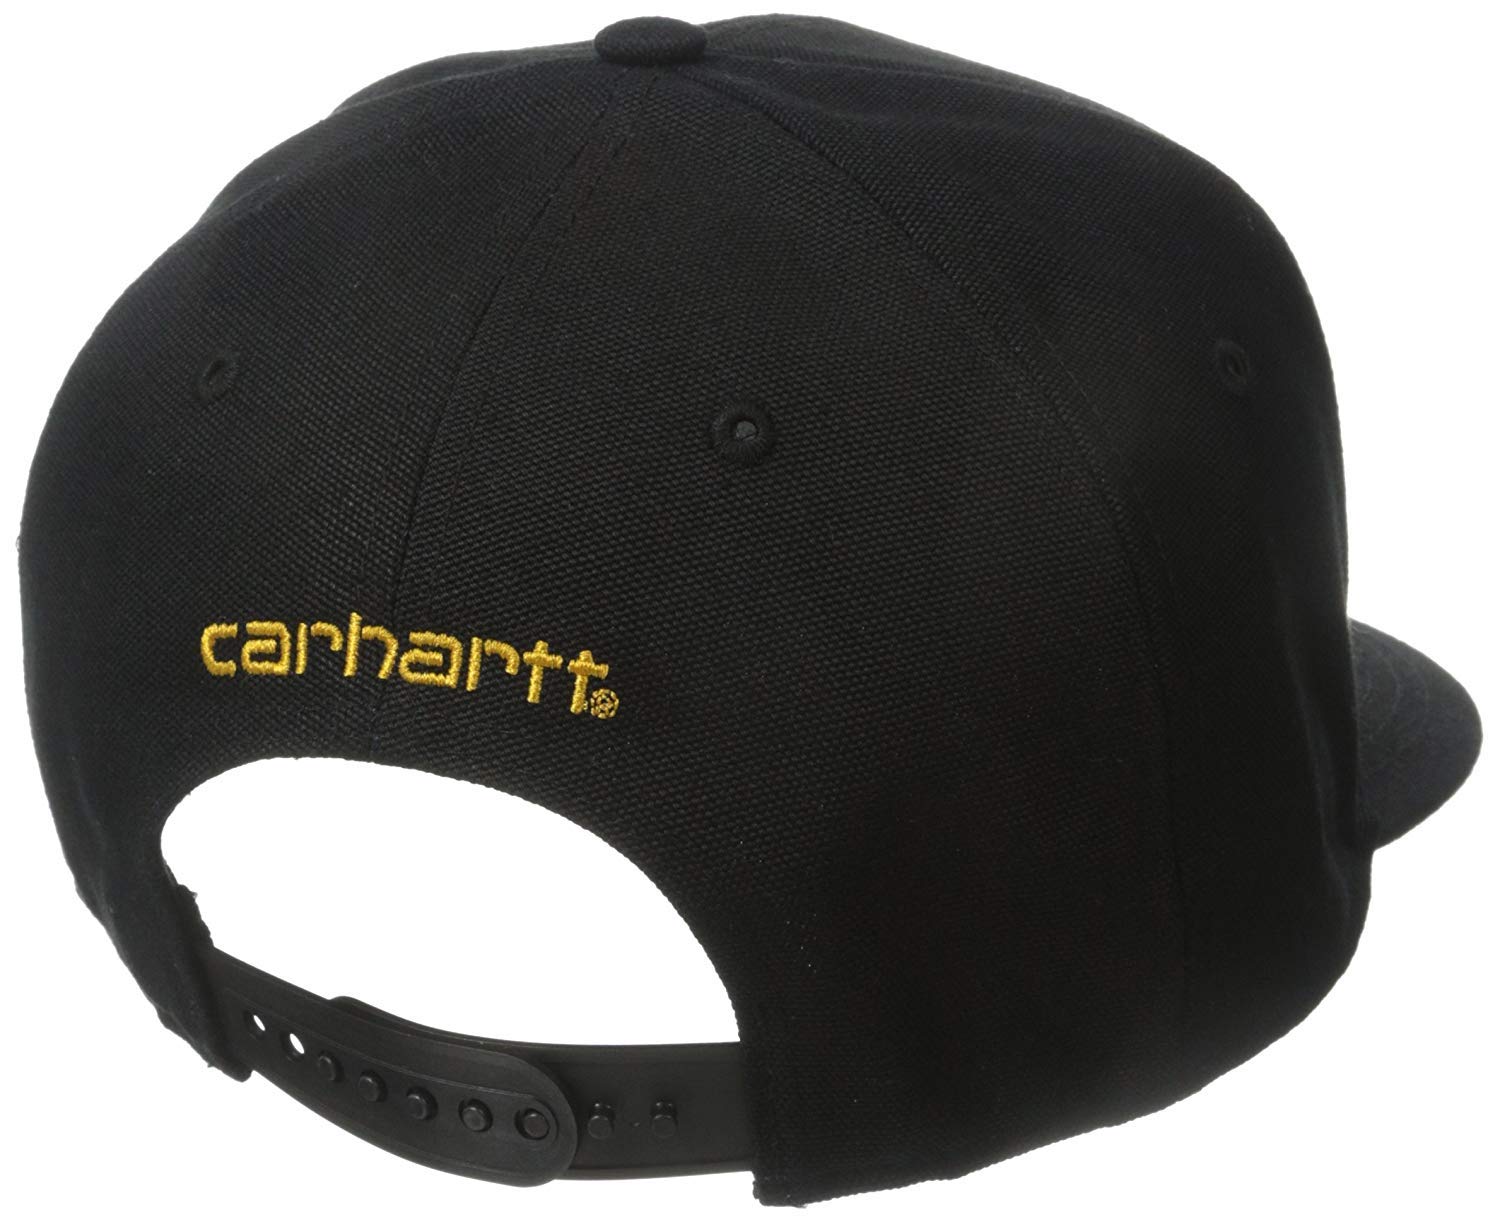 Carhartt Men's 100 Percent Cotton Duck Moisture Wicking Fast Dry Ashland Cap,Black,One Size